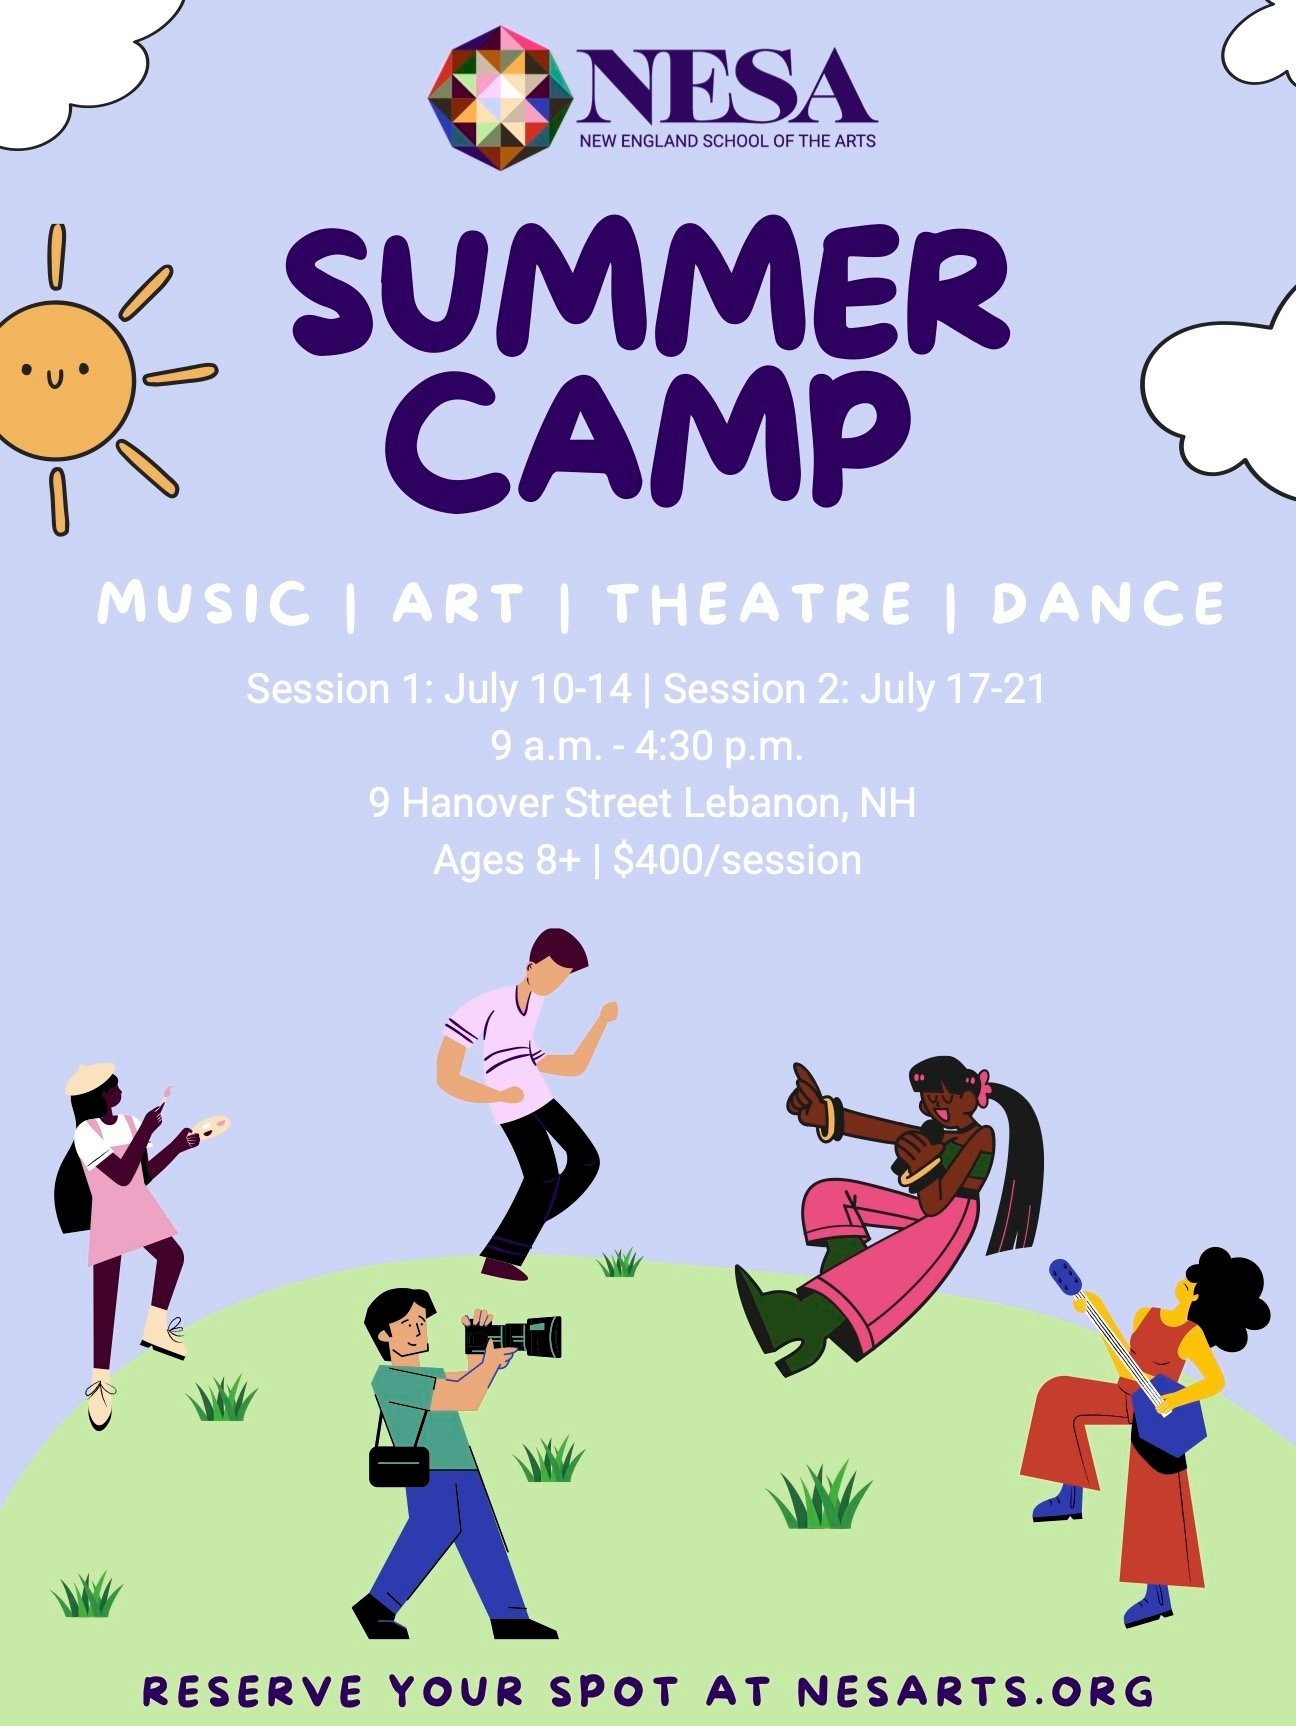 Arts Summer Camp — New England School of the Arts